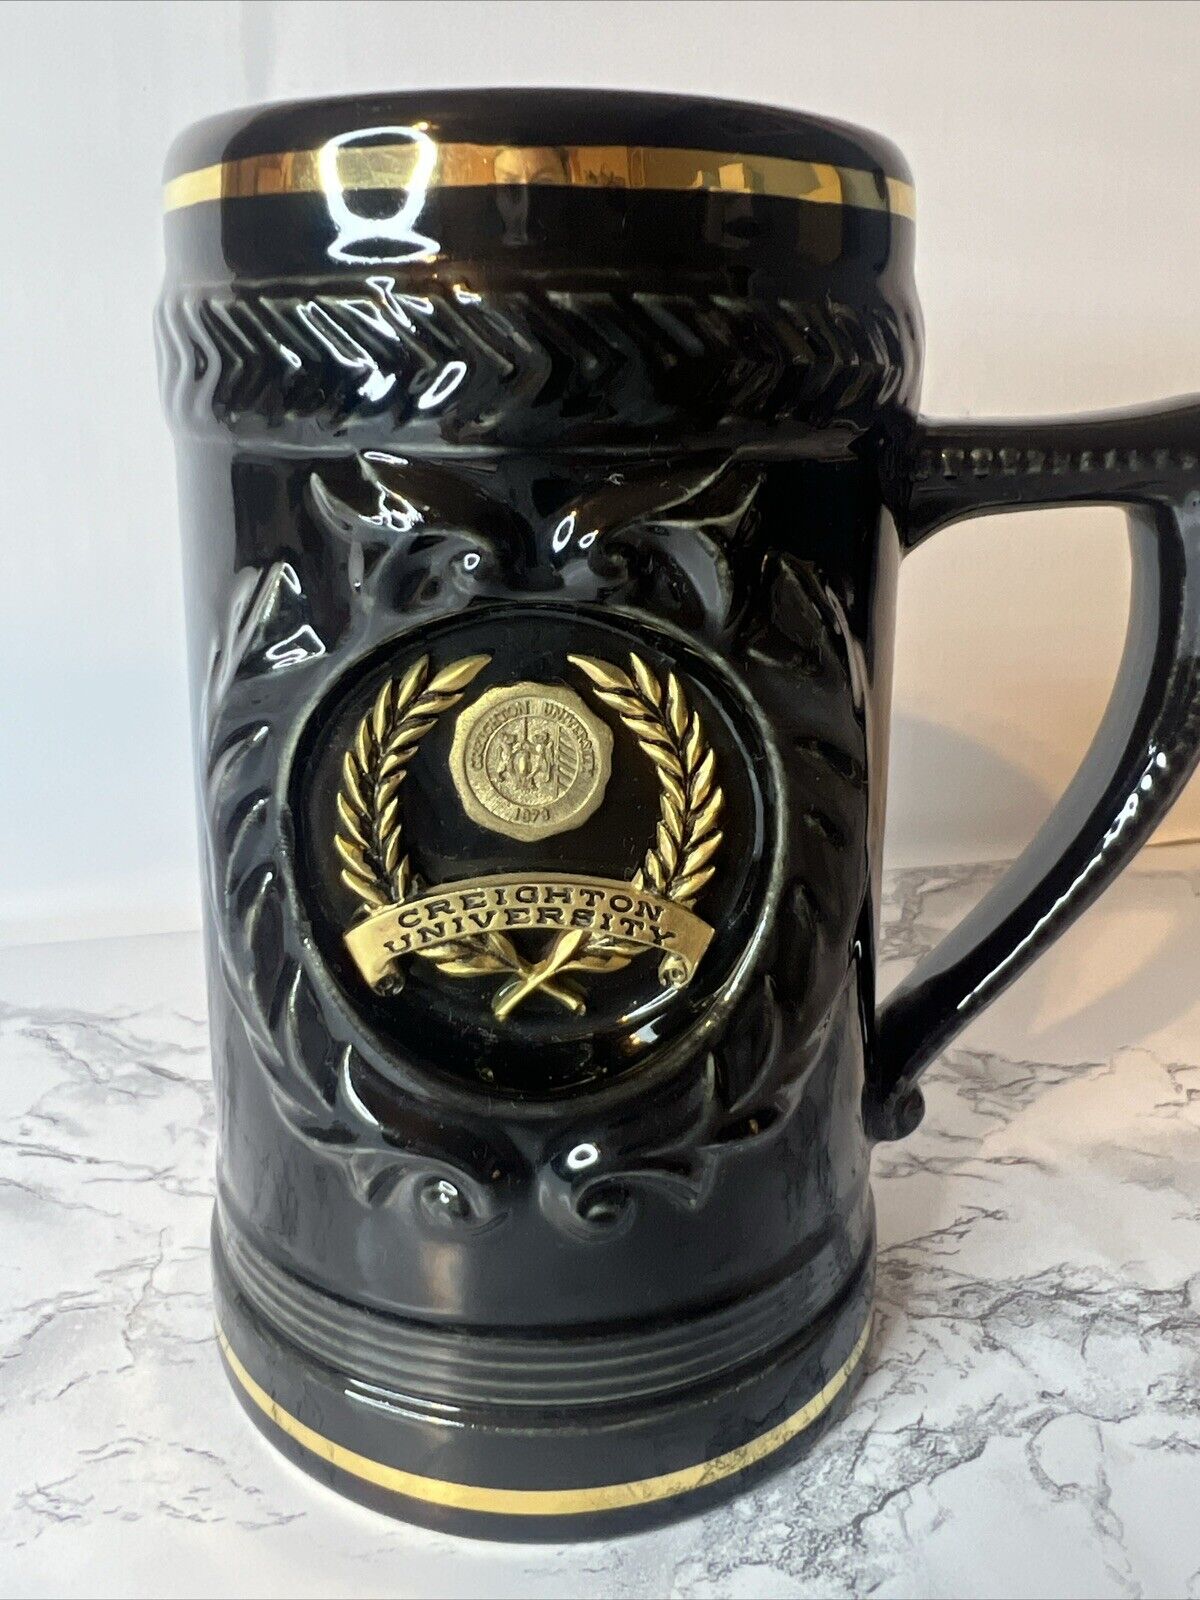 Vintage Creighton University Collectible Beer Stein Black & Gold Mug with Crest